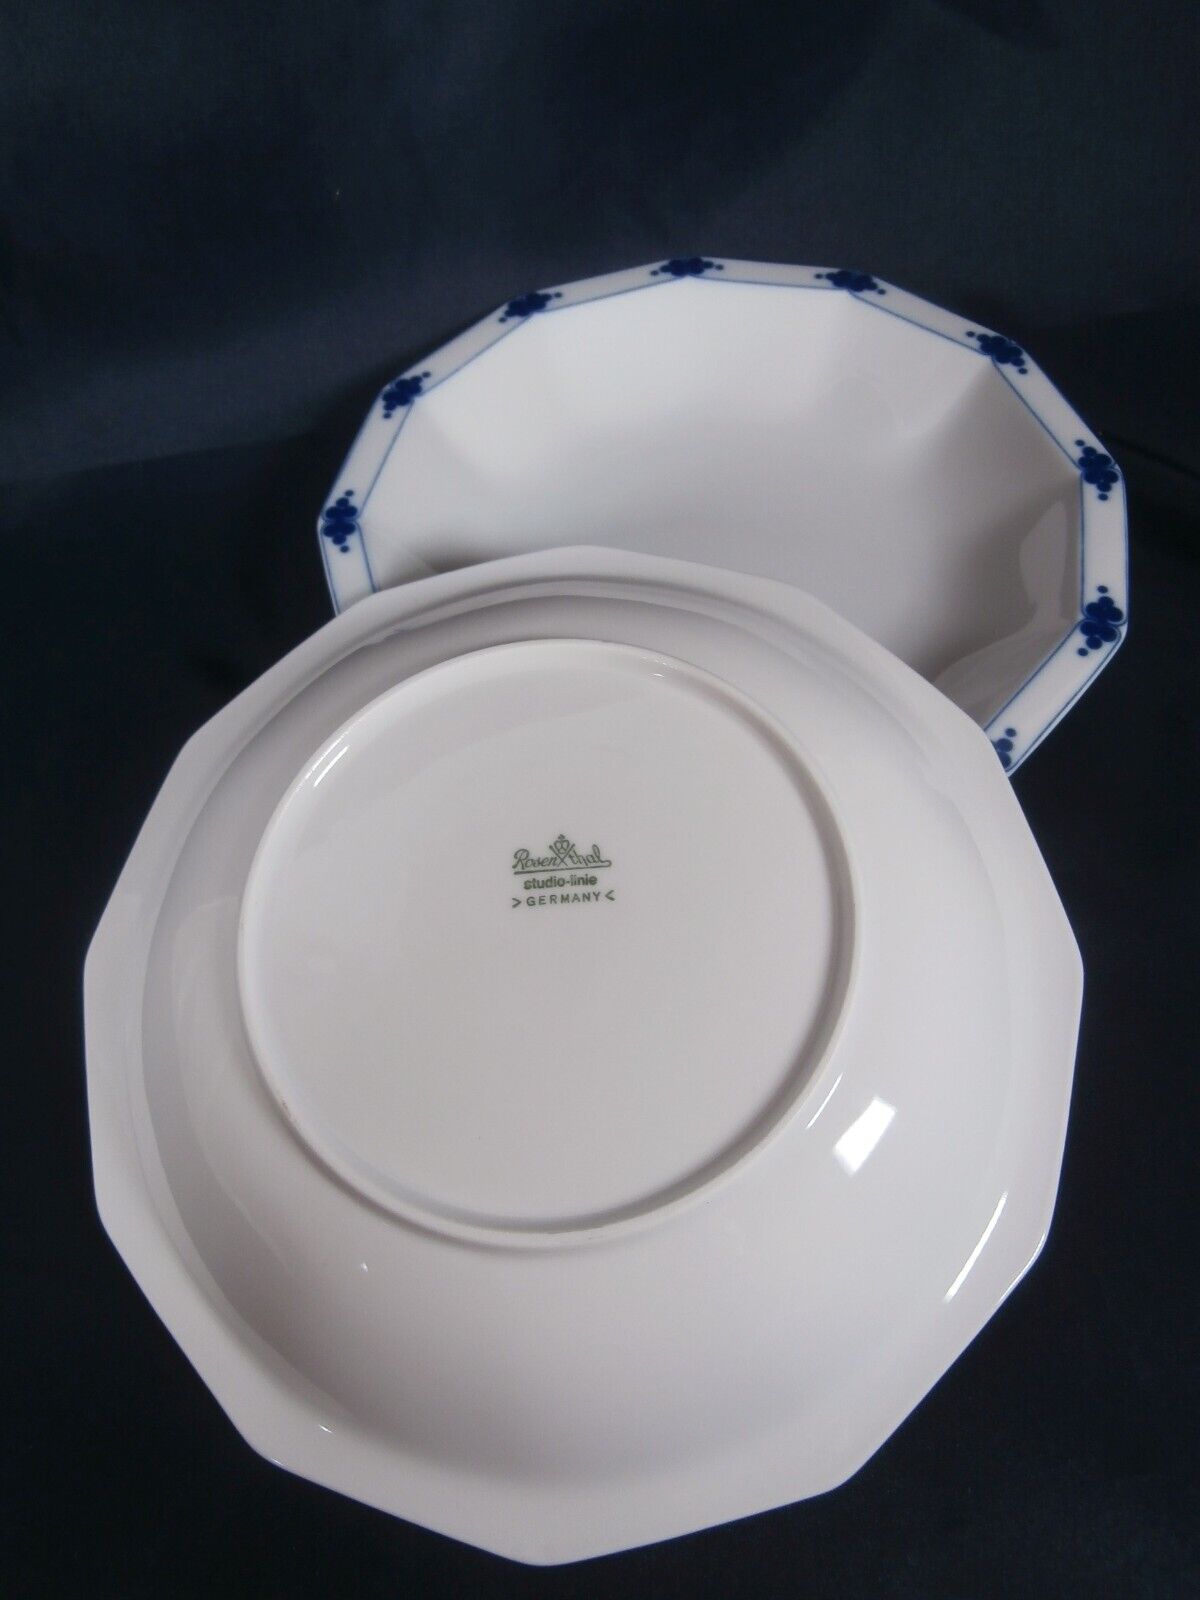 💥 Rosenthal Corinth Blue and White 2 rimmed Soup bowl Tapio Wirkkala